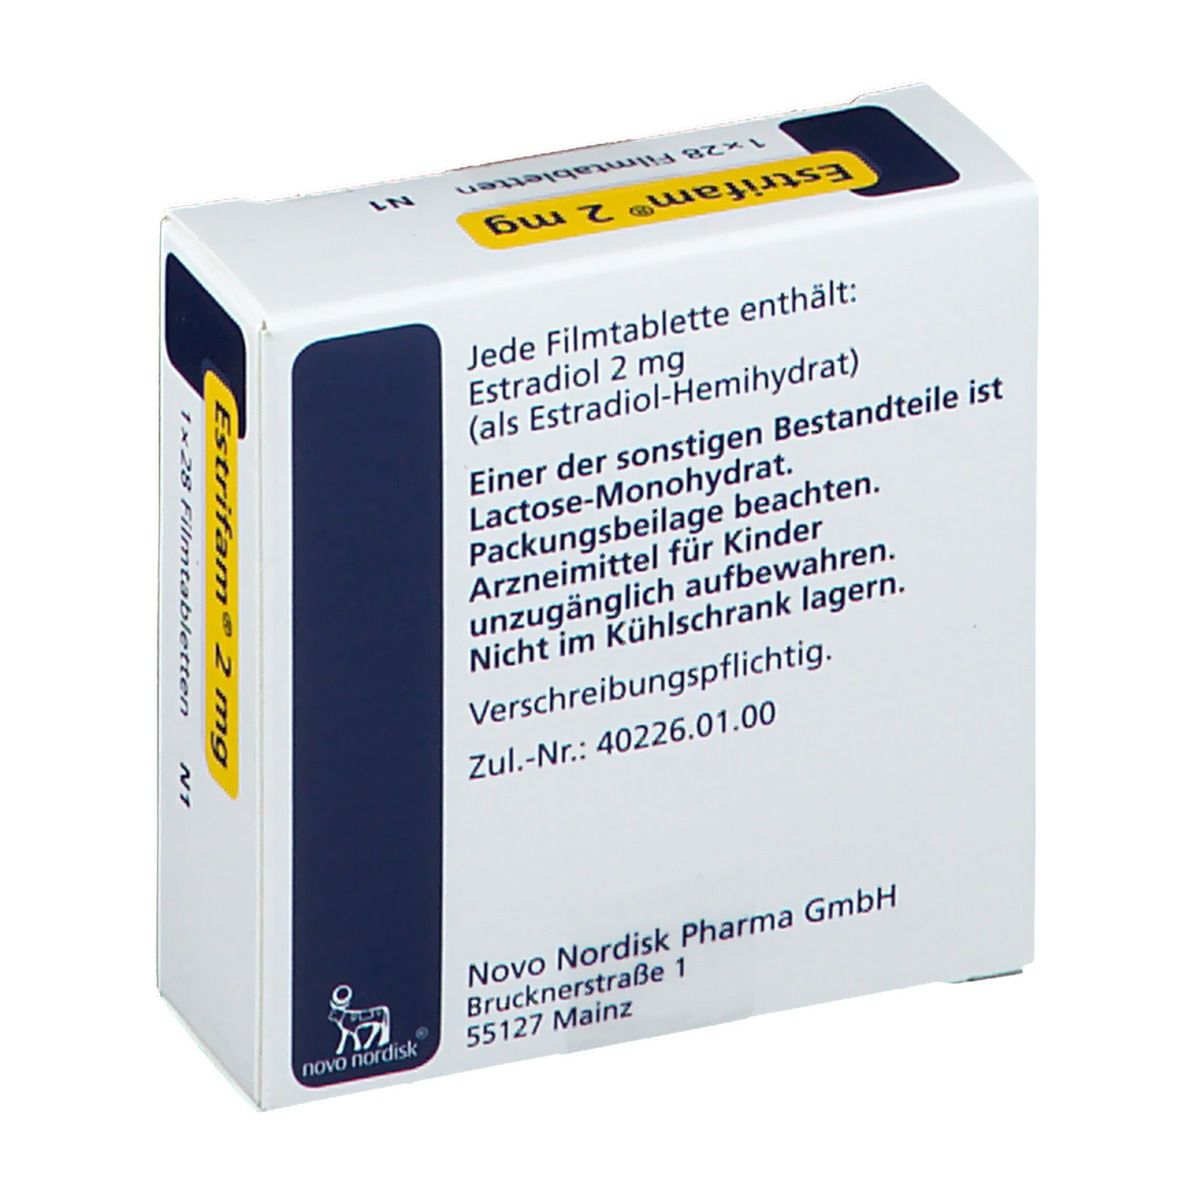 Estrifam® 2 mg